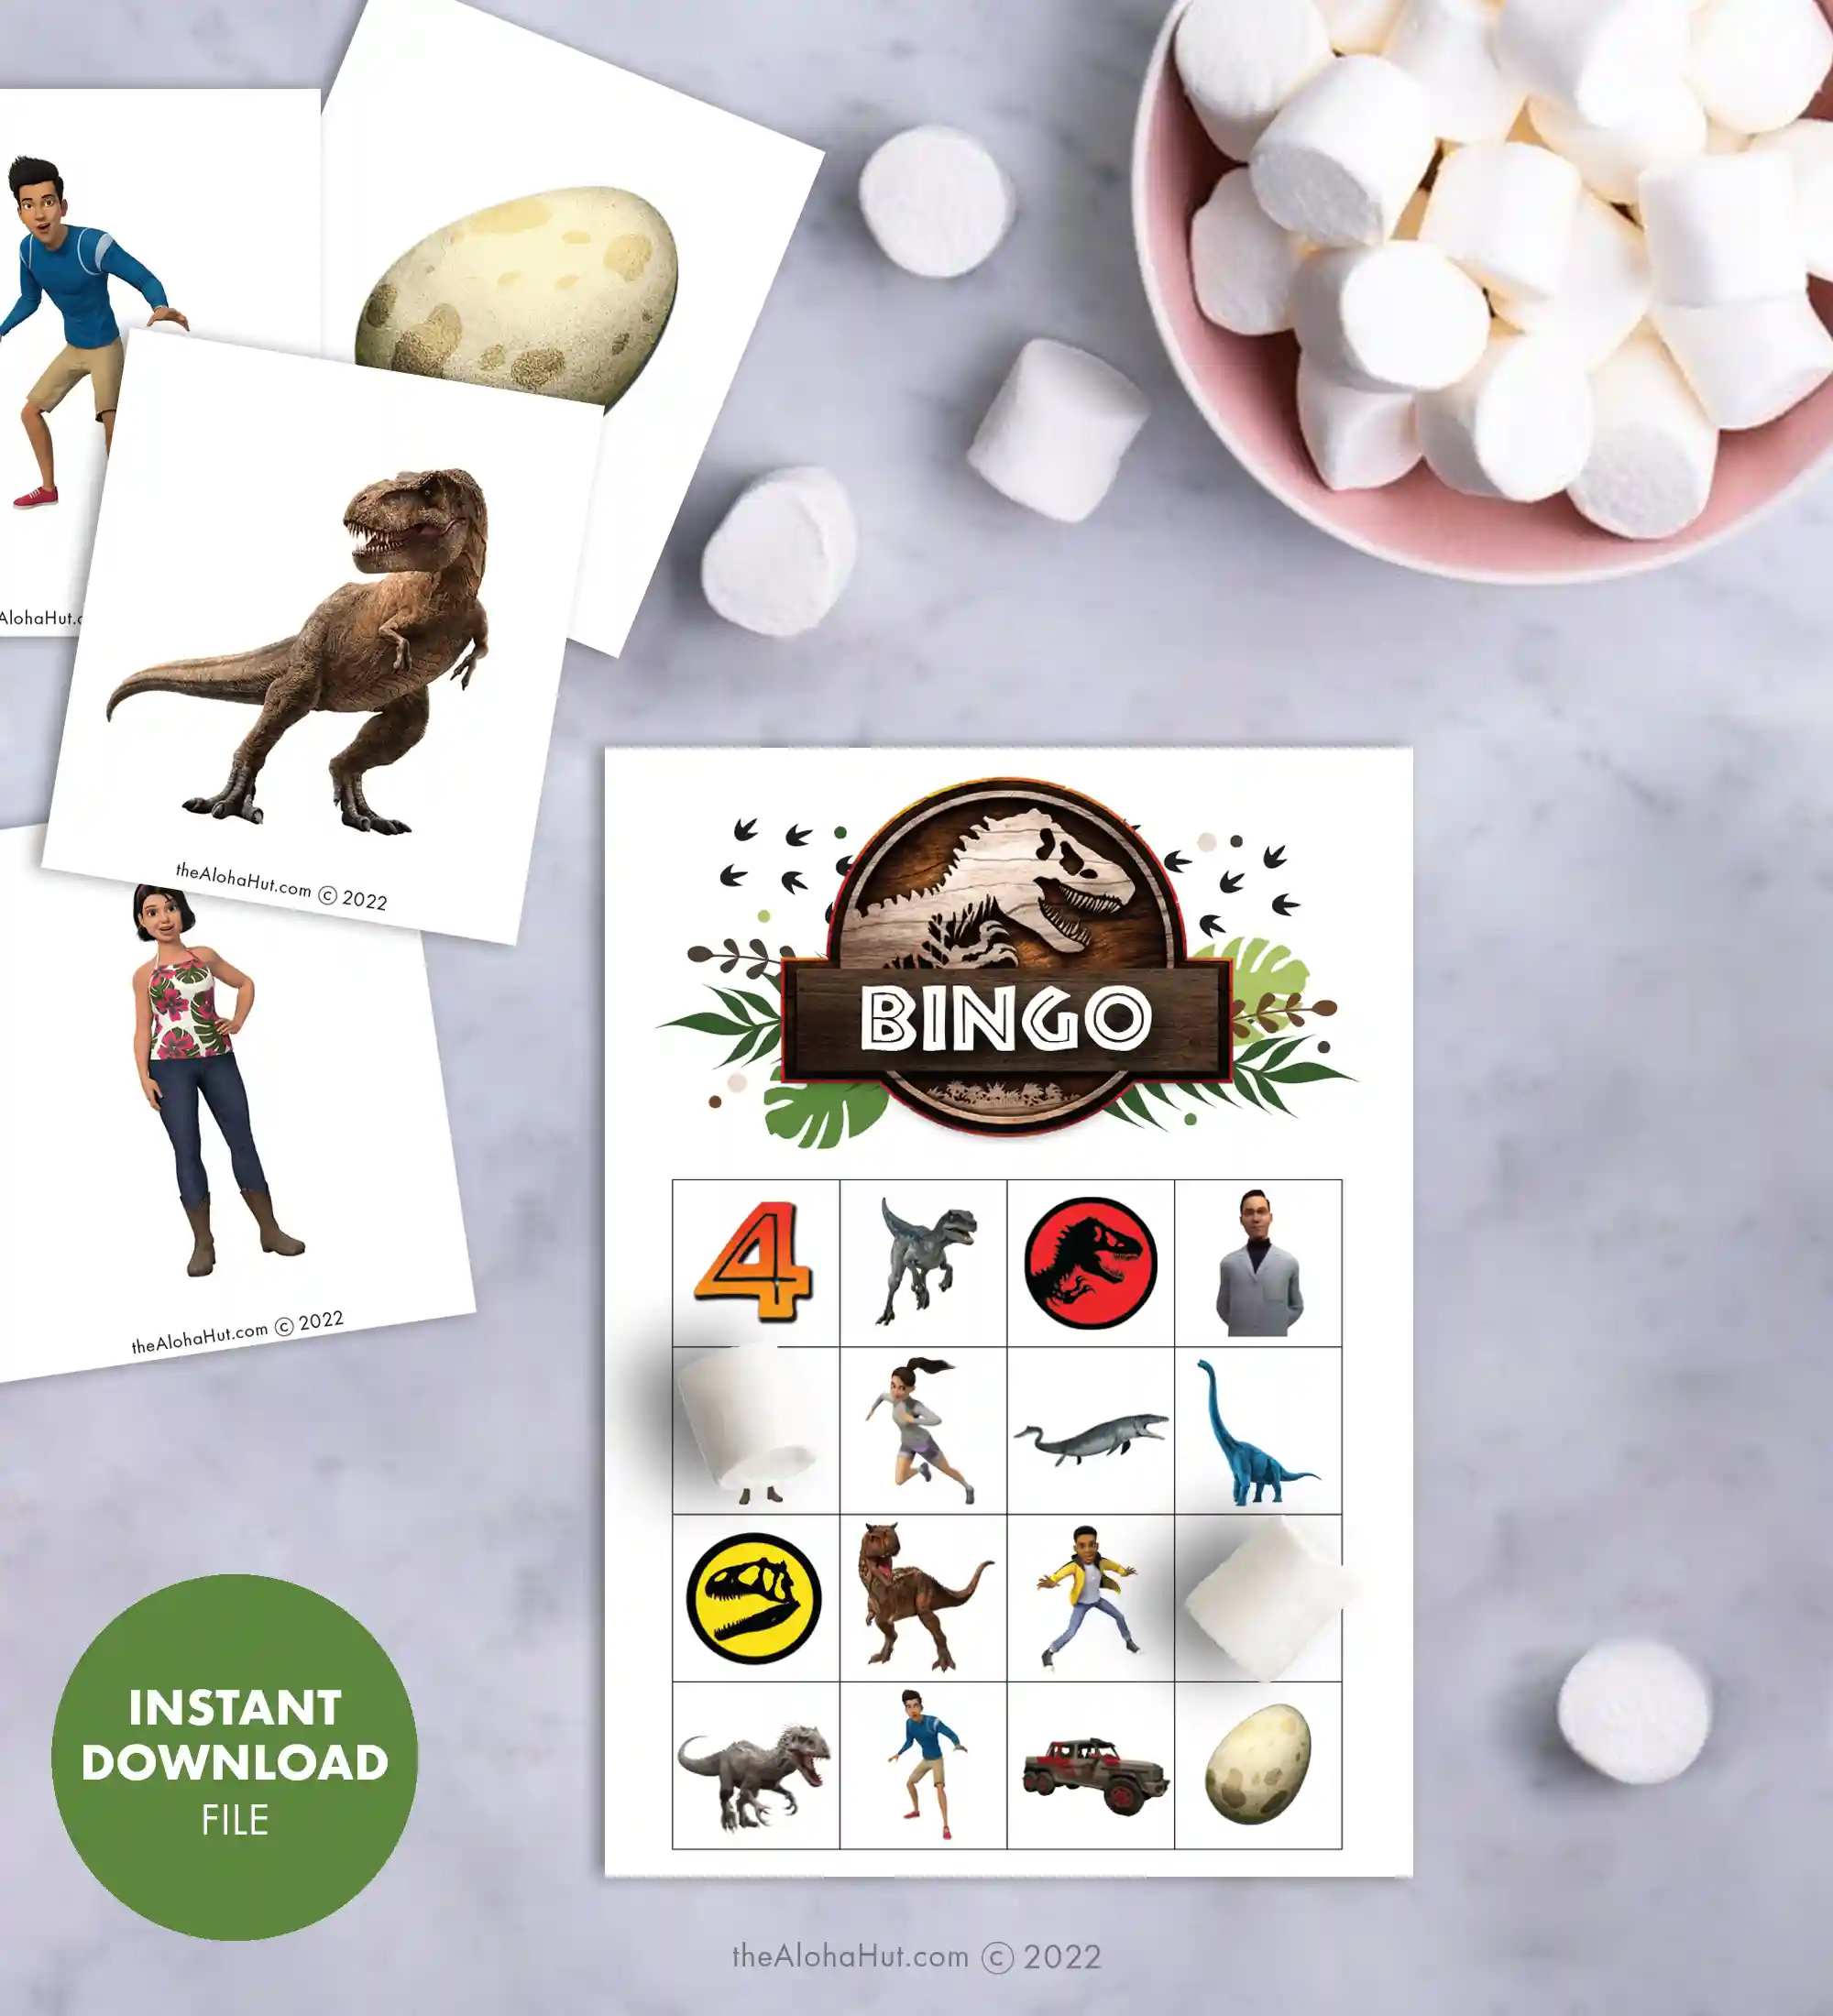 Jurassic World Camp Cretaceous Party Ideas - Dinosaur Party Ideas - free printable party decor & games - bingo